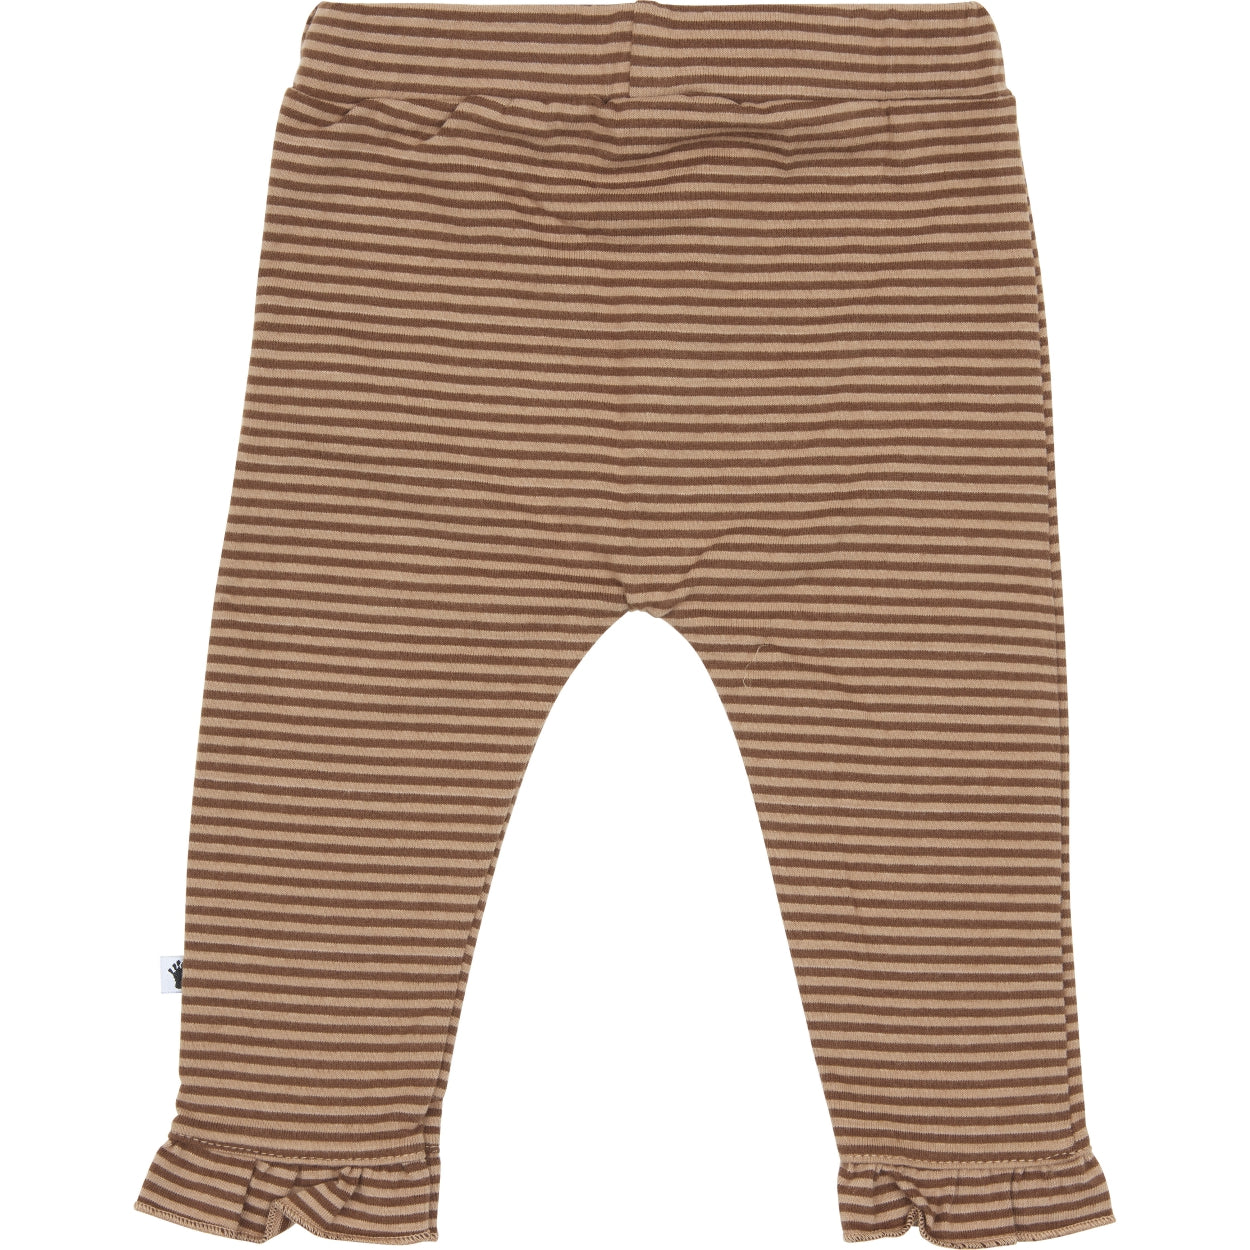 Meisjes Trouser Ruffle van Klein Baby in de kleur Stripe Burro/Rawhide in maat 86.